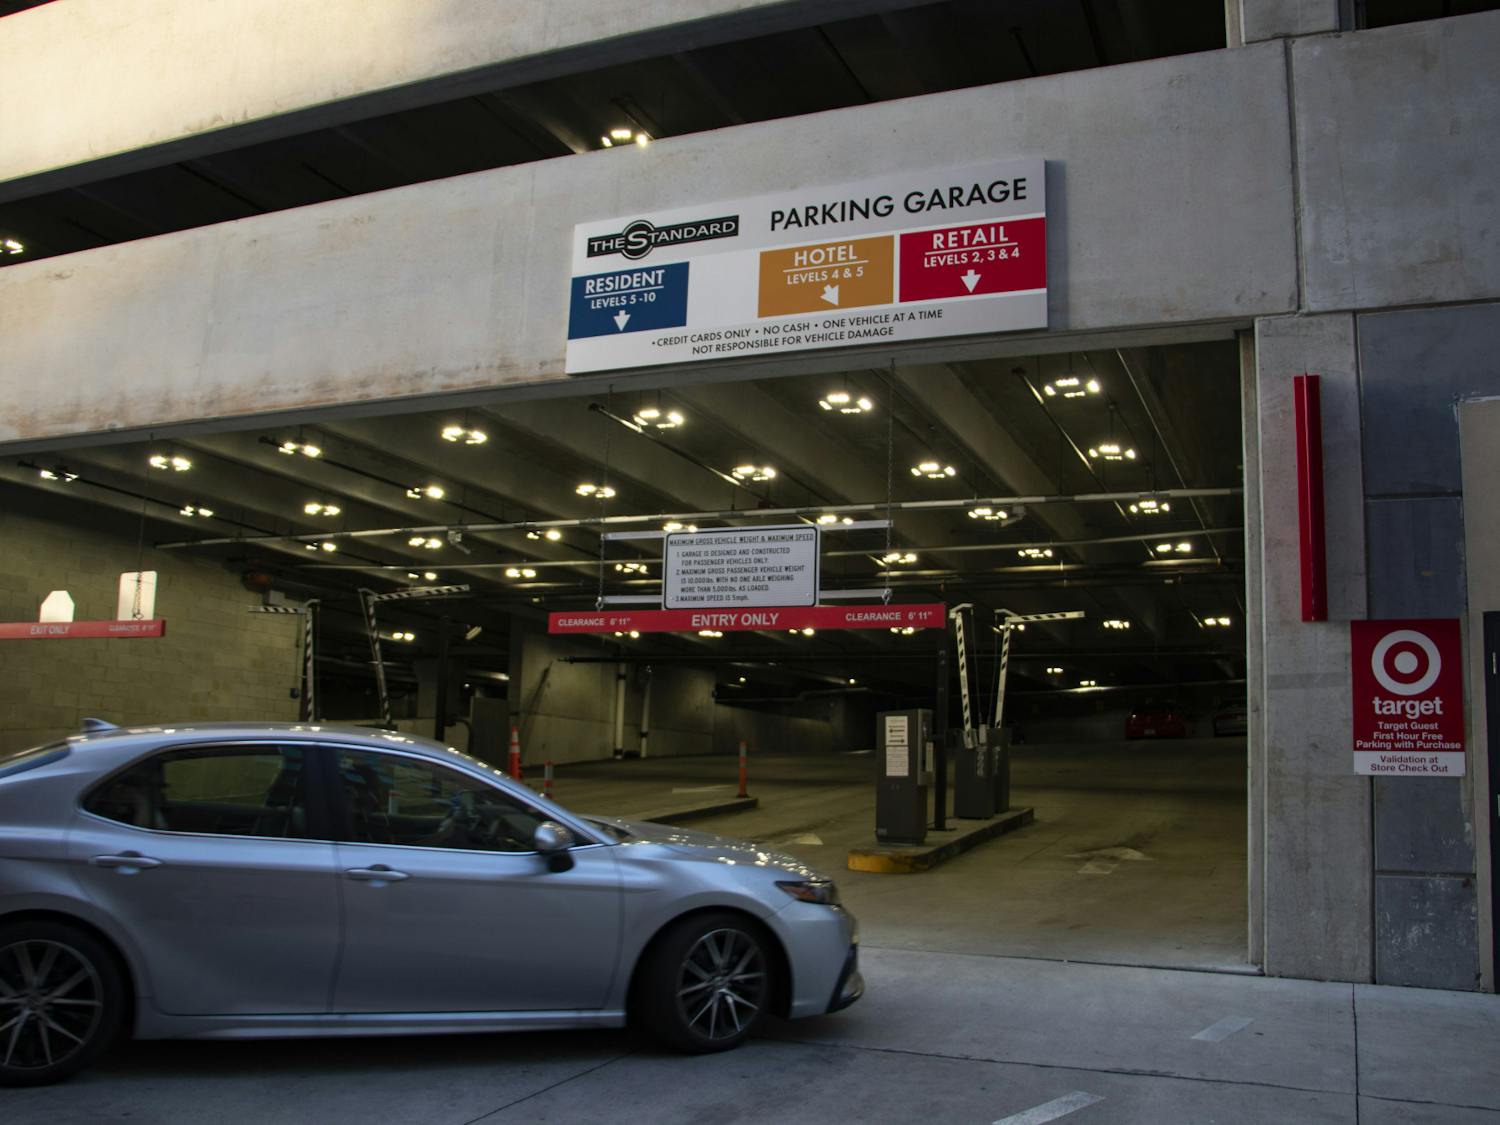 The Standard Parking Garage is seen on Sunday, Nov. 21, 2021.